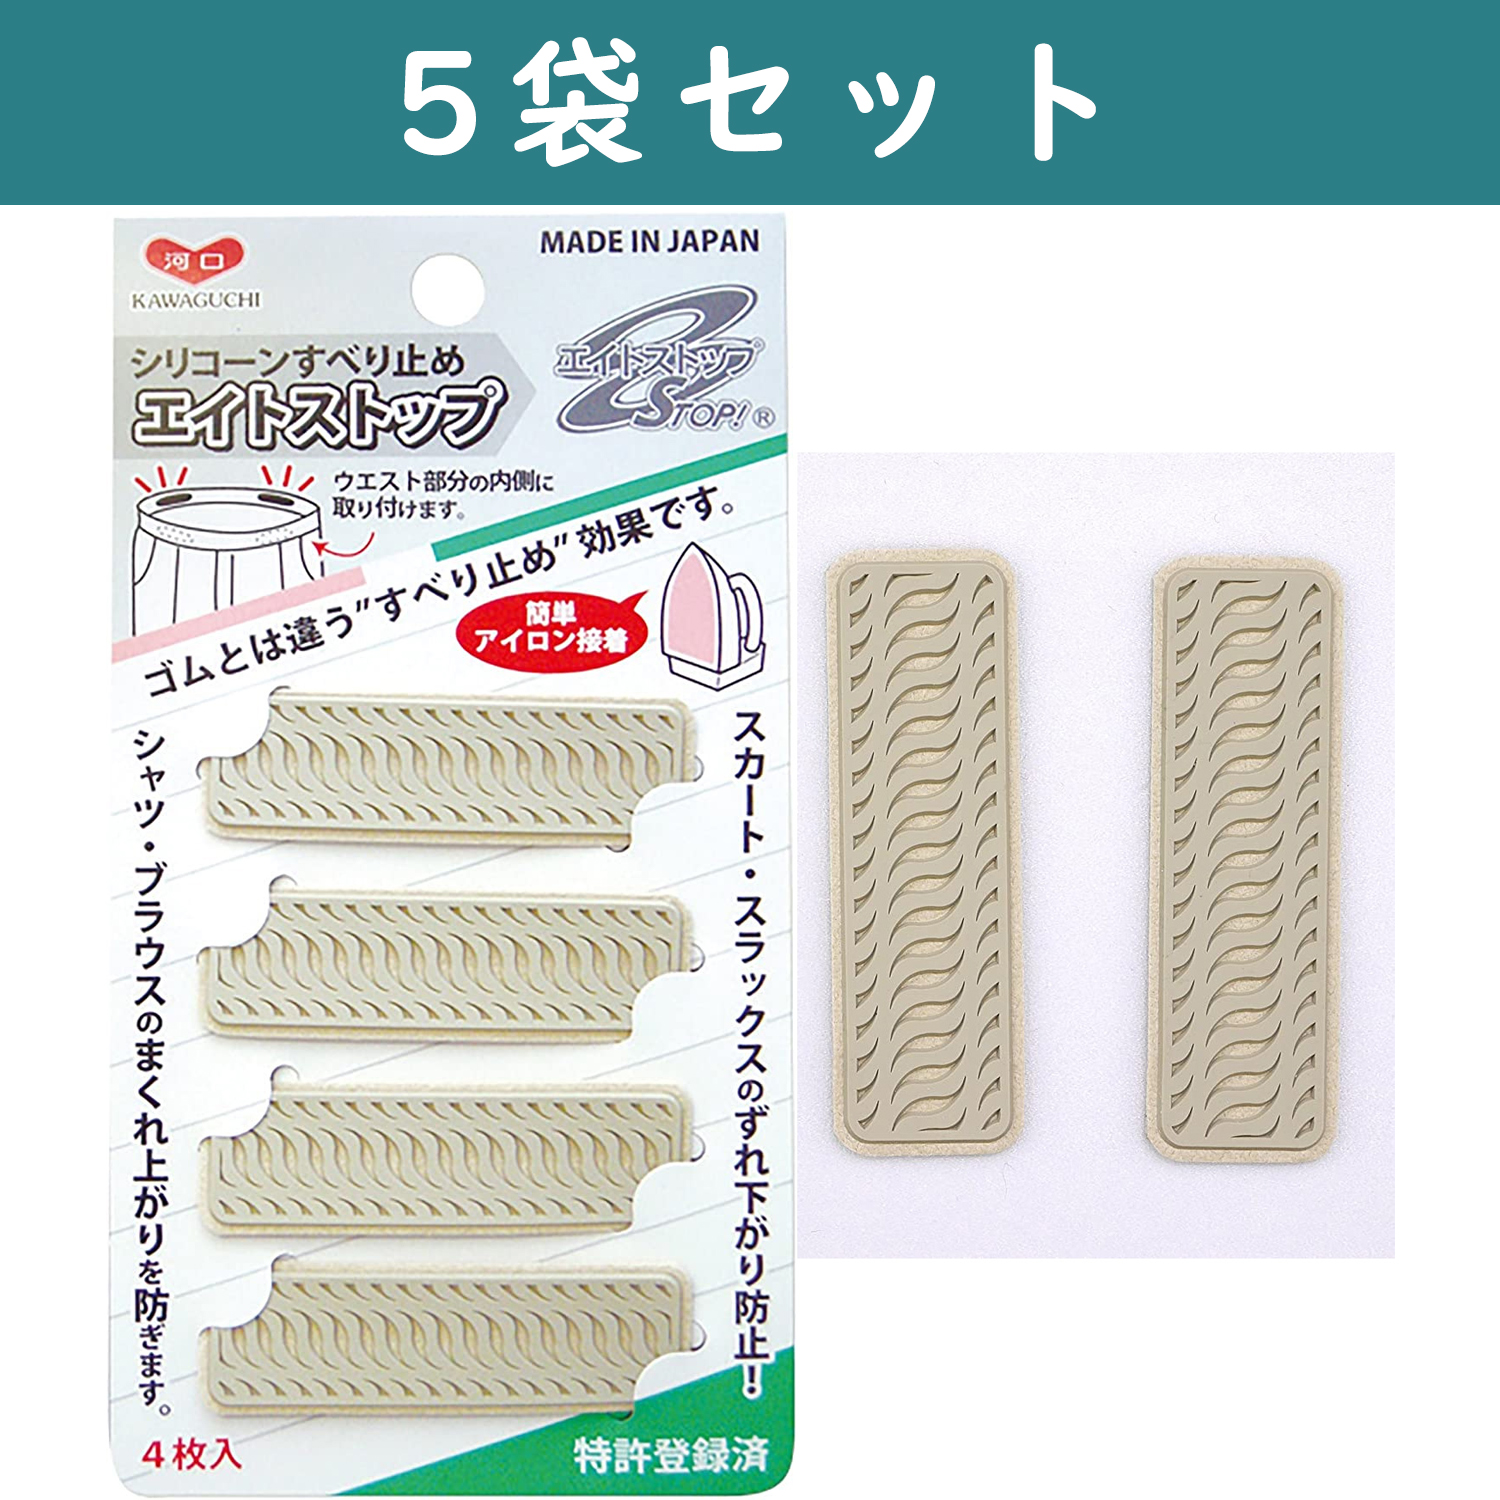 TK80018-5 KAWAGUCHI Eight Stop Silicone Anti-Slip Heat Adhesive Type 4 pcs x 5 Bags Set Beige (Set)